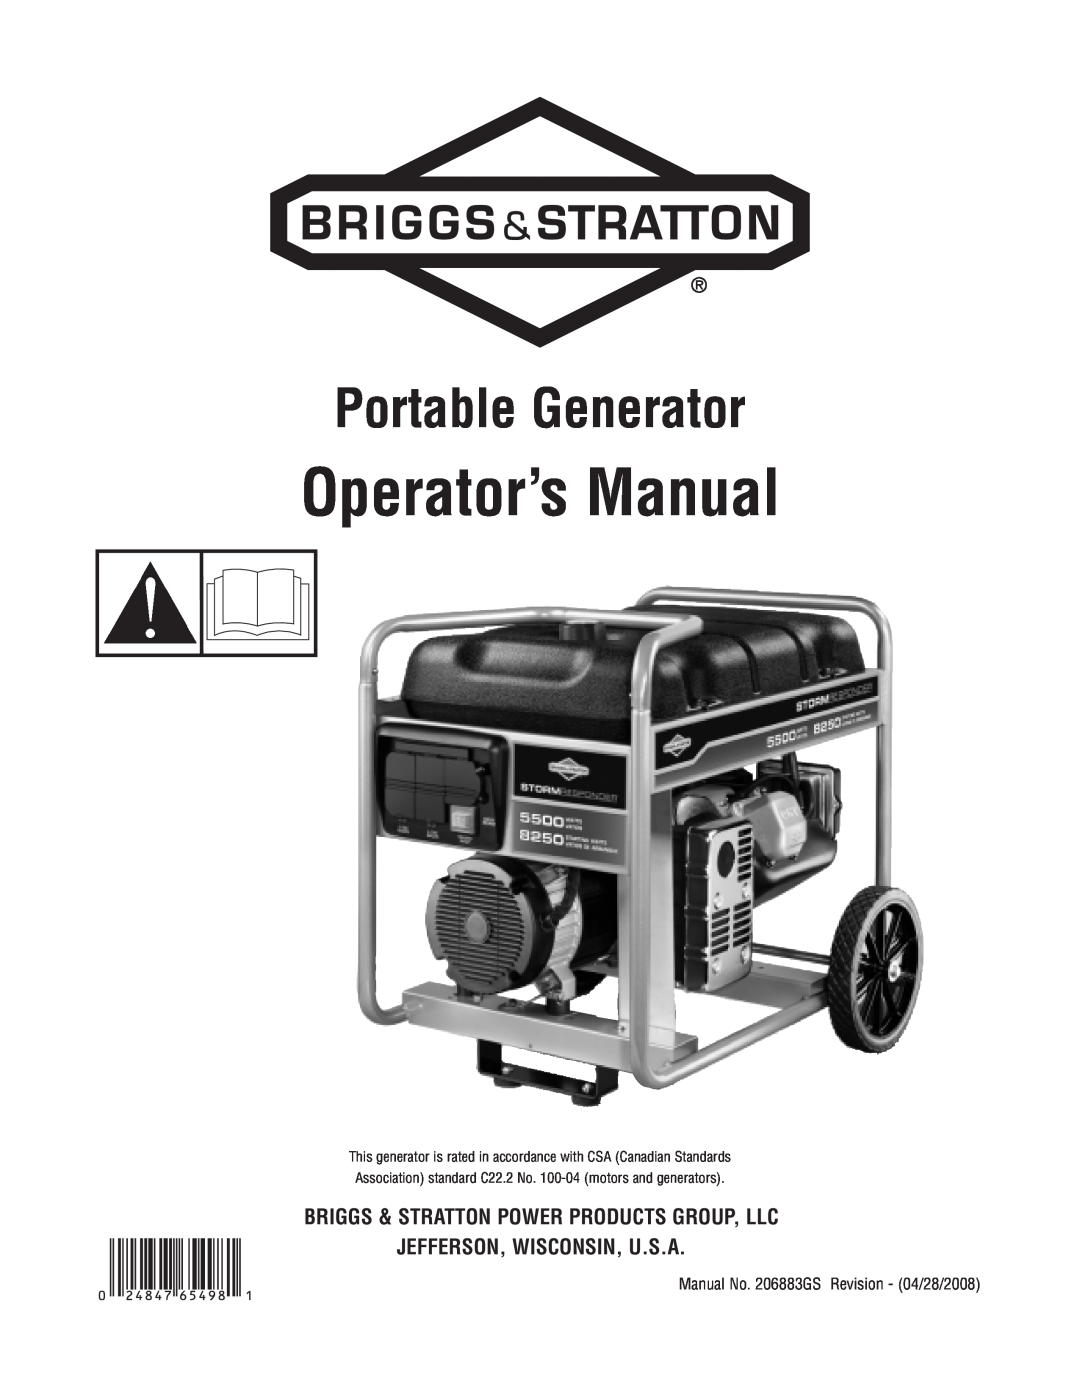 Briggs & Stratton Portable Generator manual Operator’s Manual 